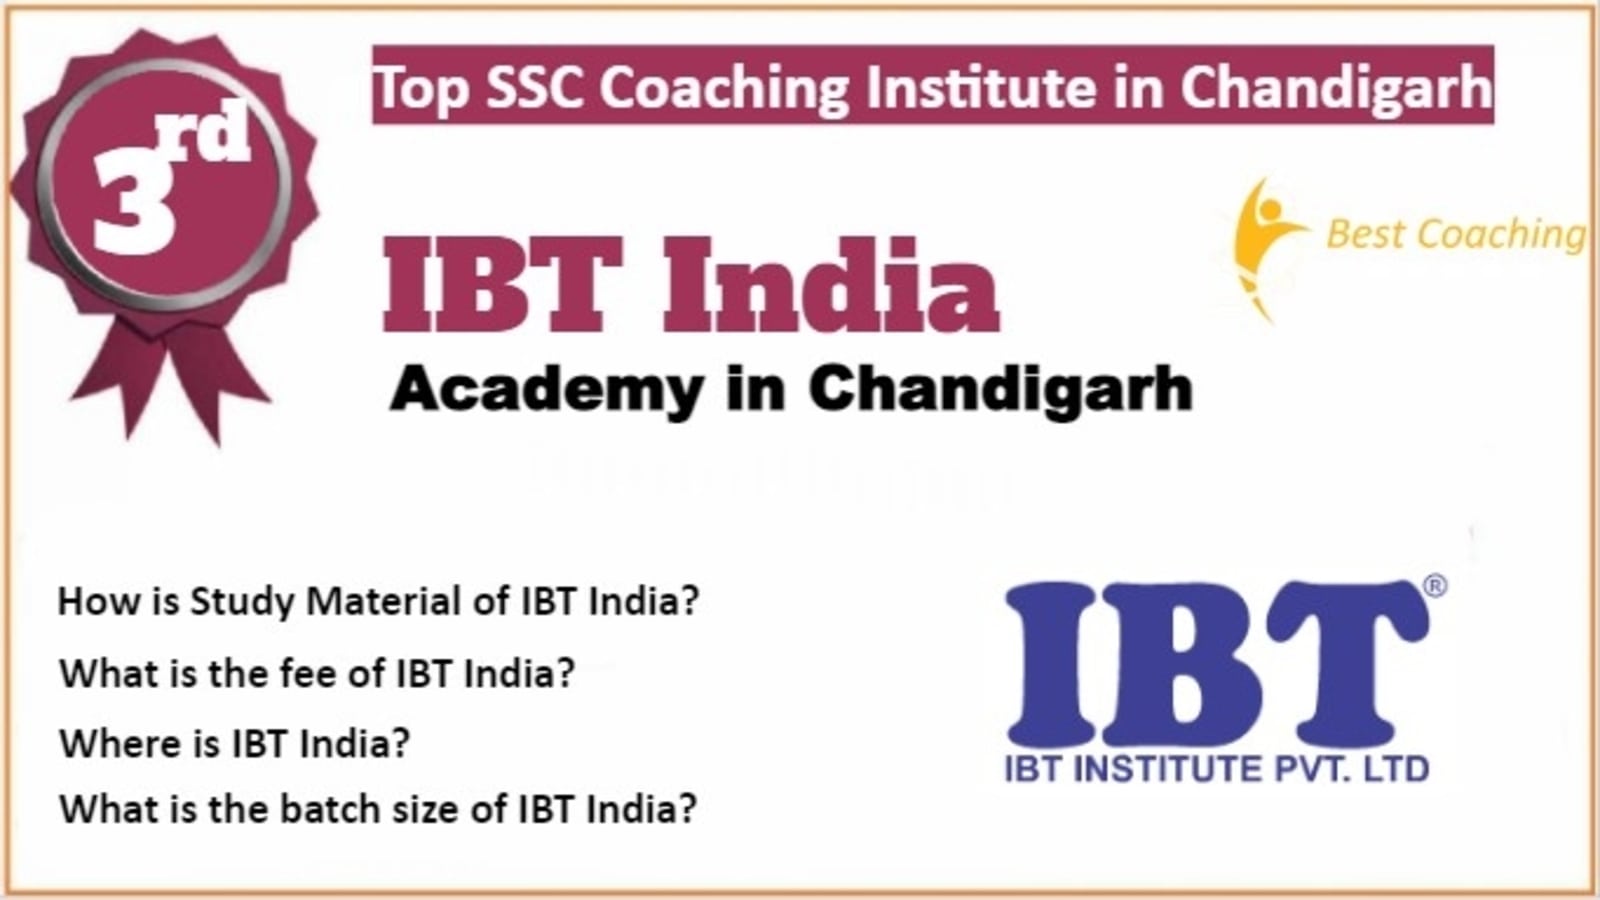 Rank 3 Best SSC Coaching in Chandigarh